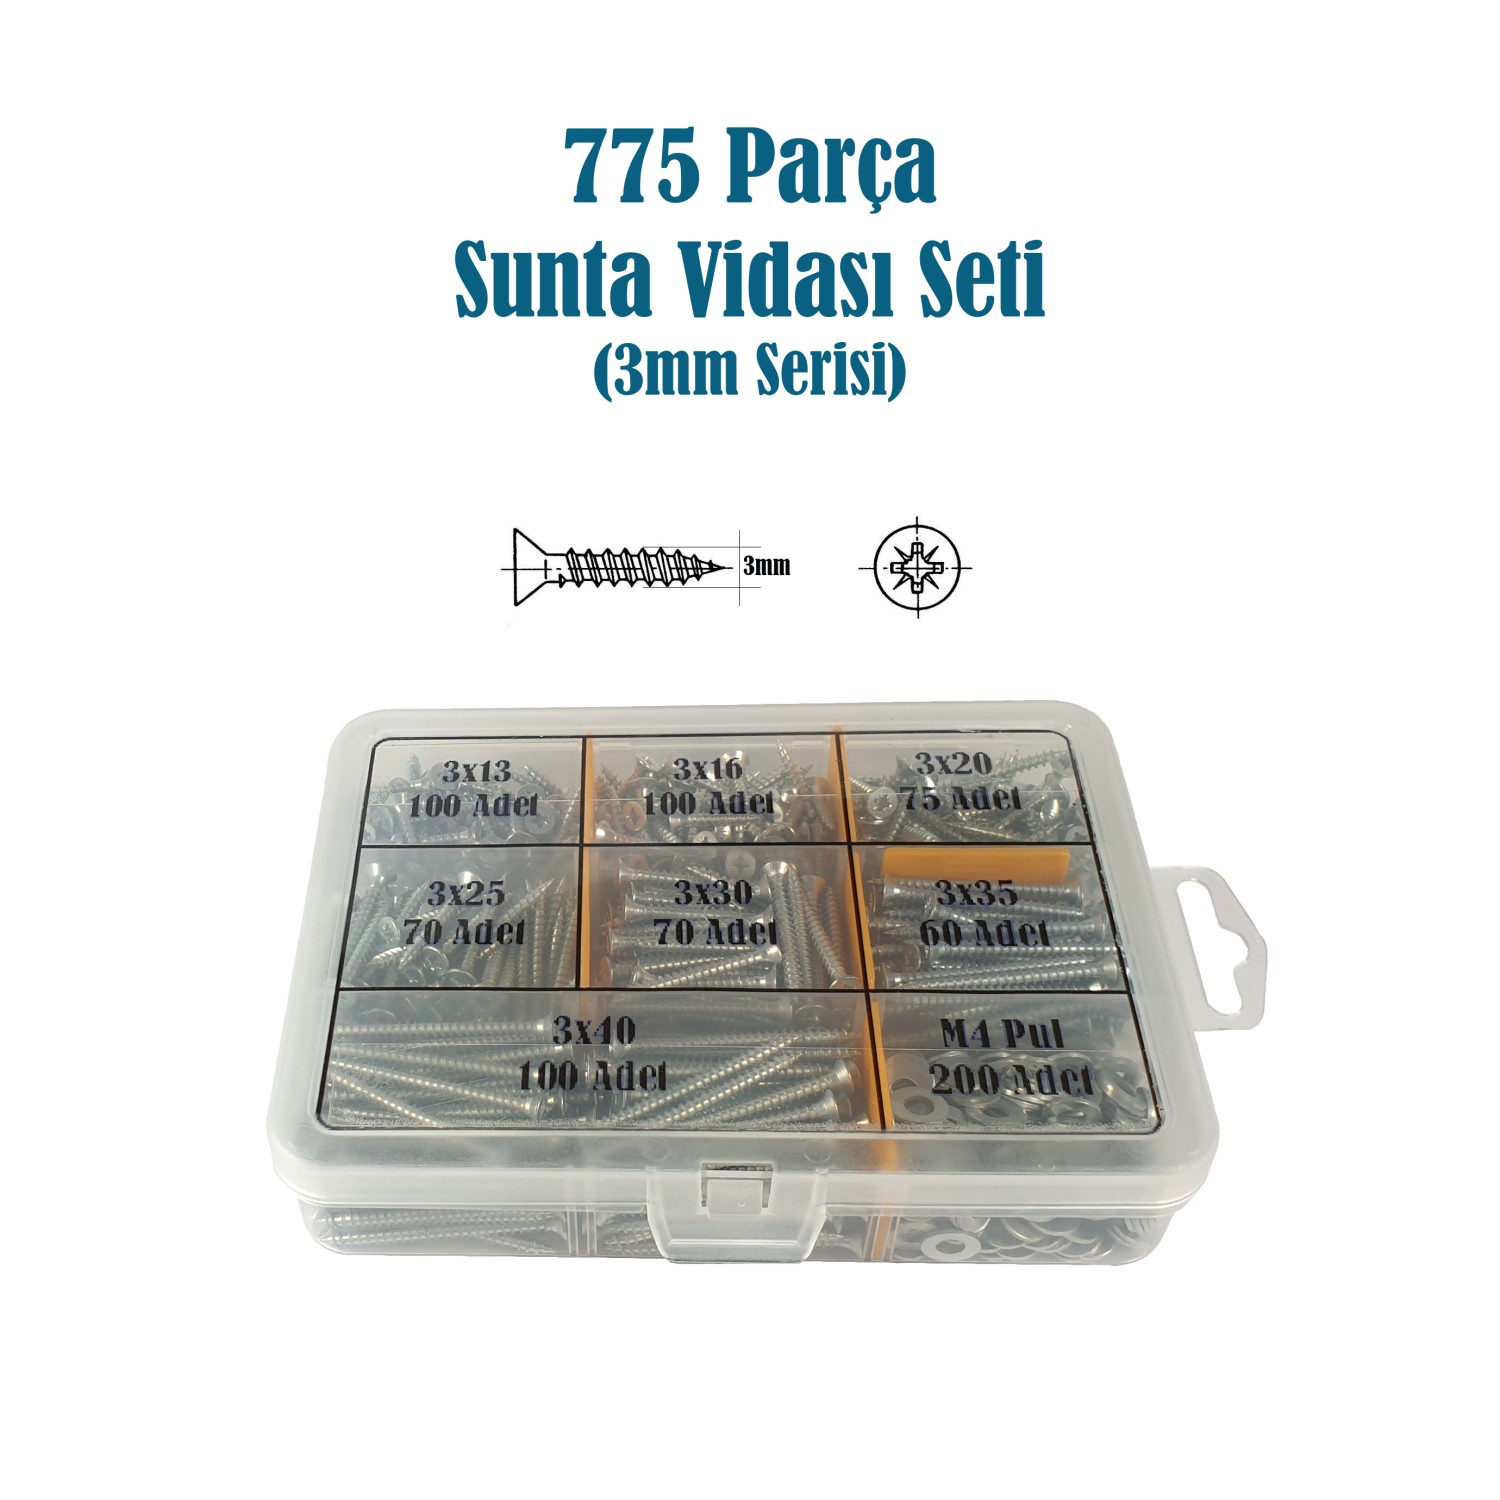 775 Parça Sunta Vidası Seti (3mm Serisi)